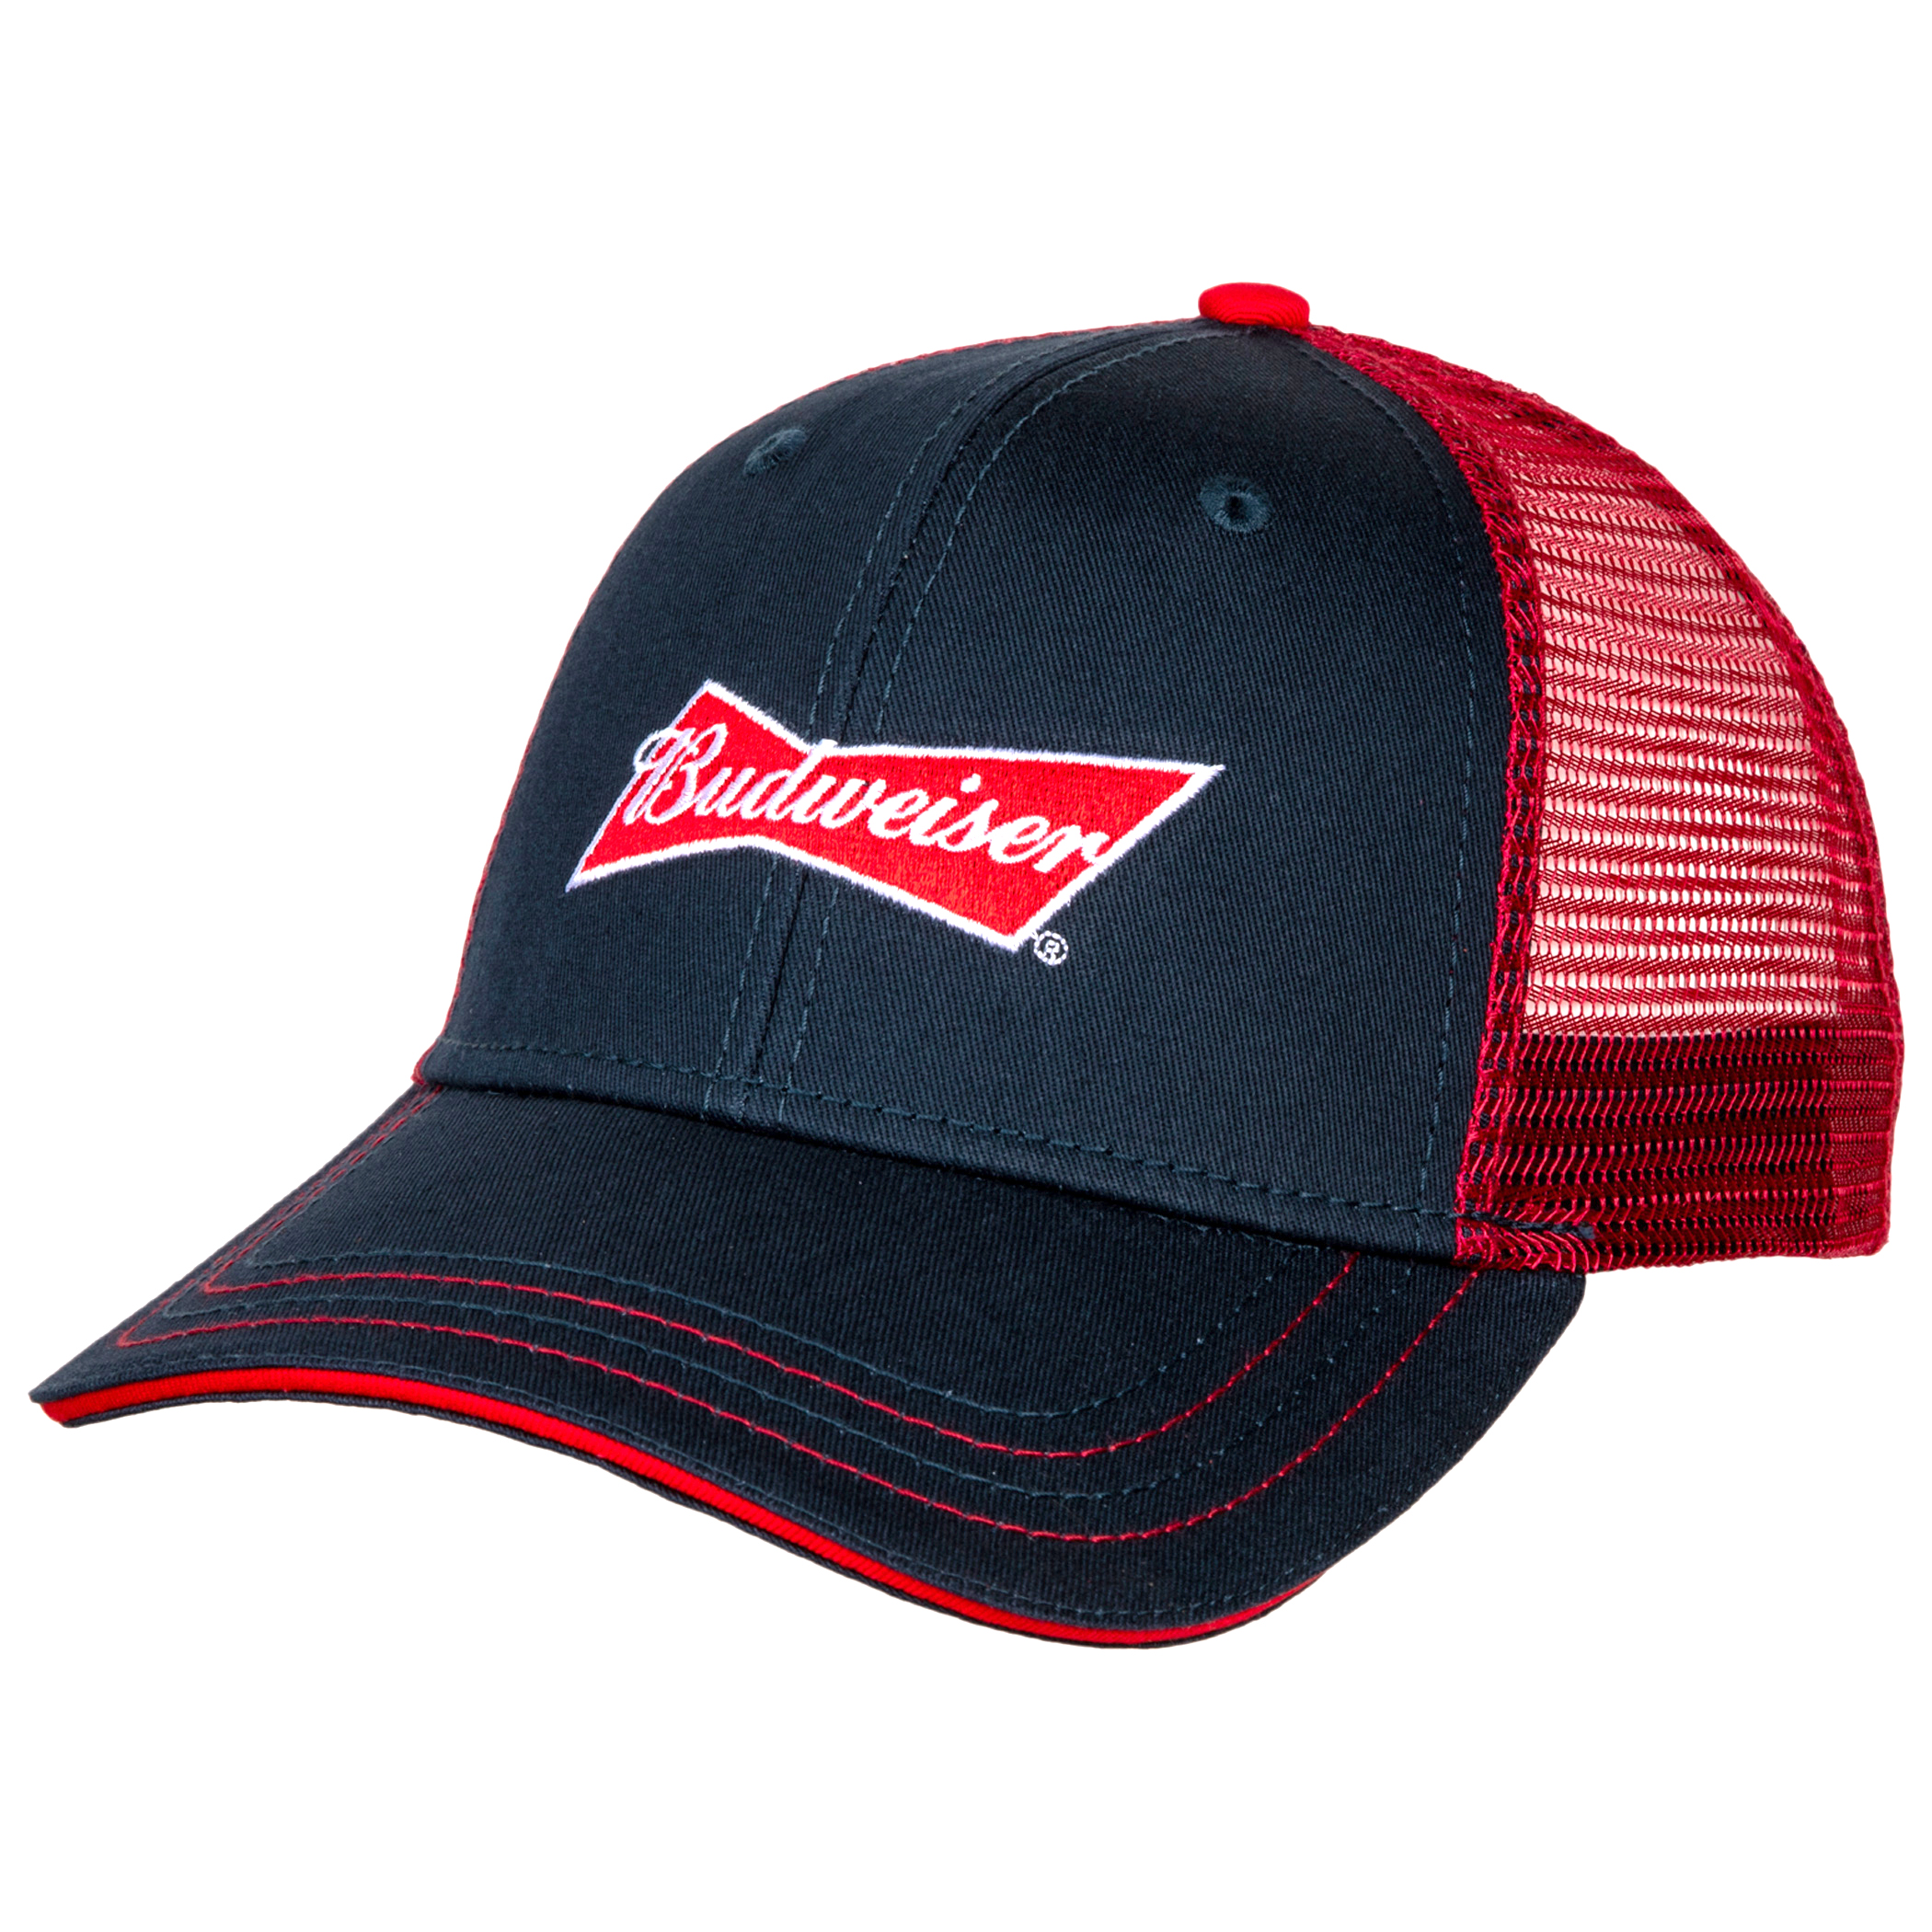 Budweiser Logo Adjustable Snapback Trucker Hat